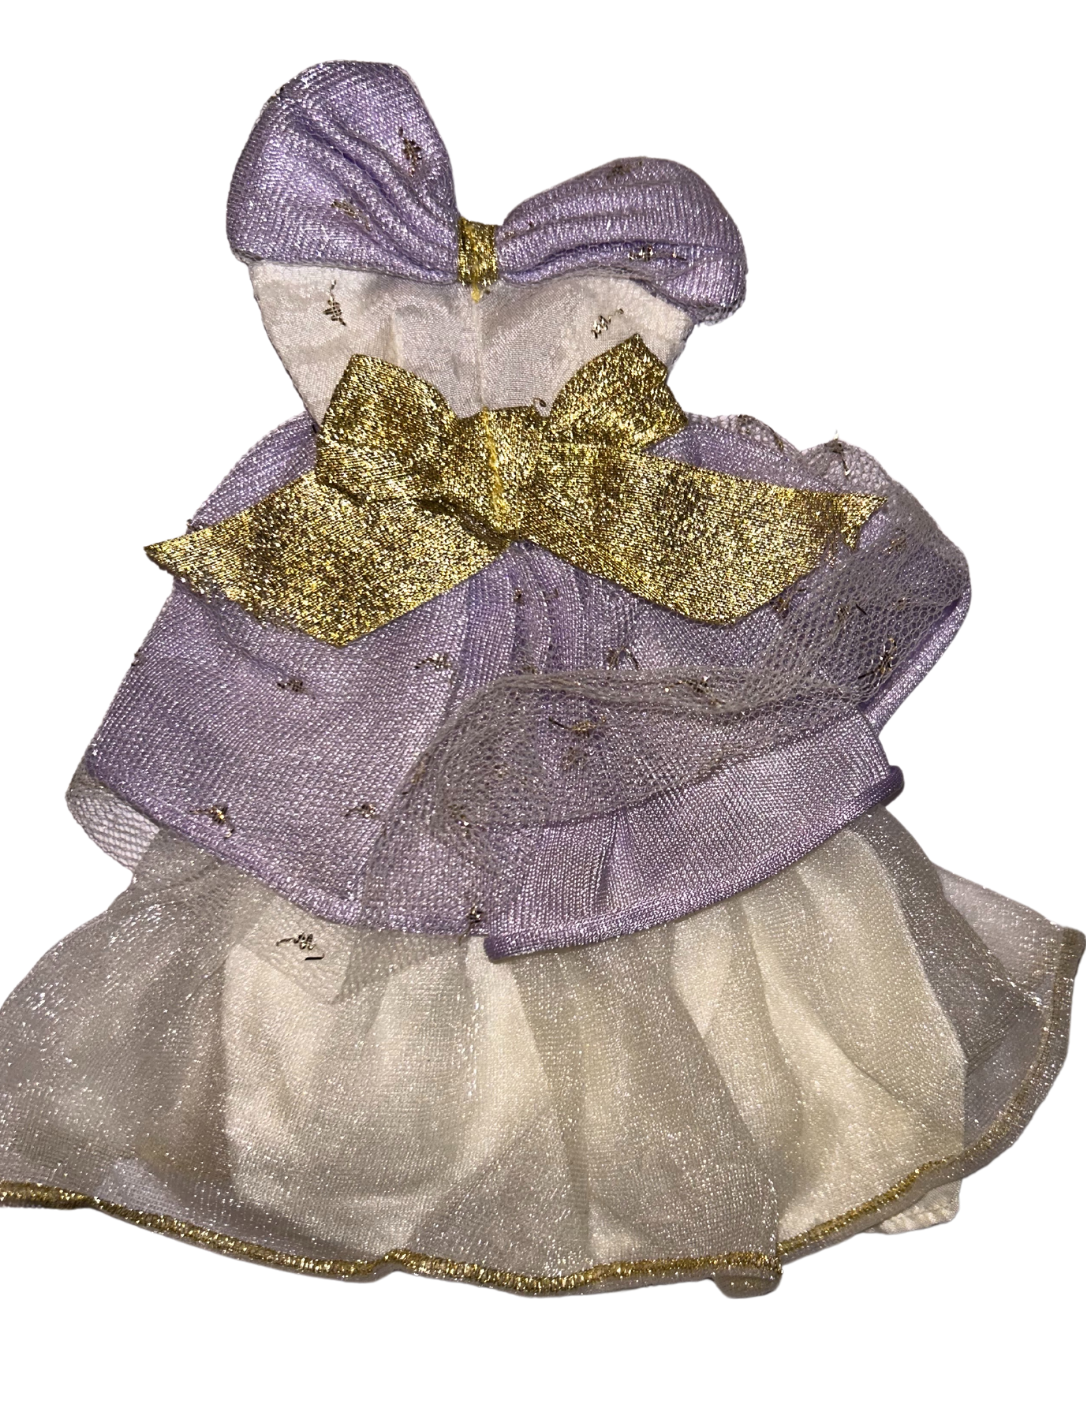 1991 Hasbro Sindy Purple and Gold Dress